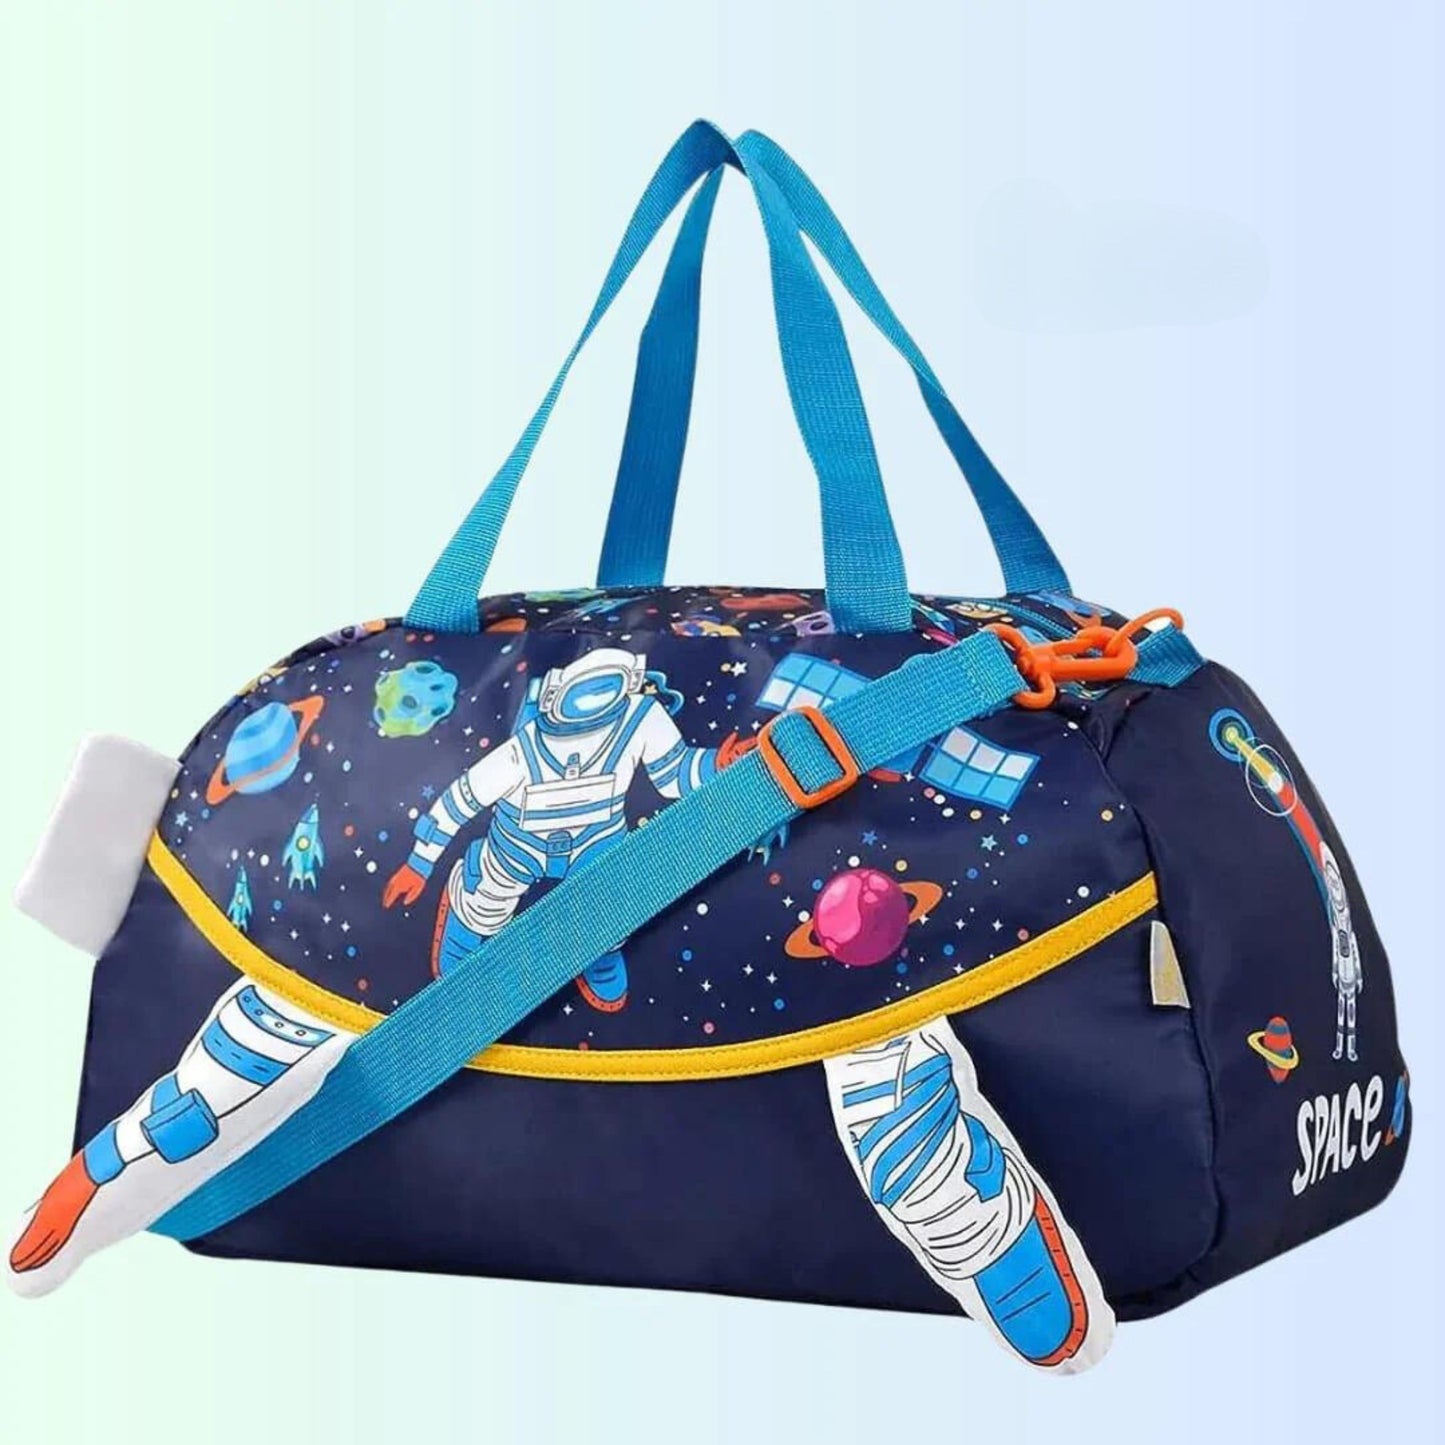 Cute Traveling Duffle Bag for Kids